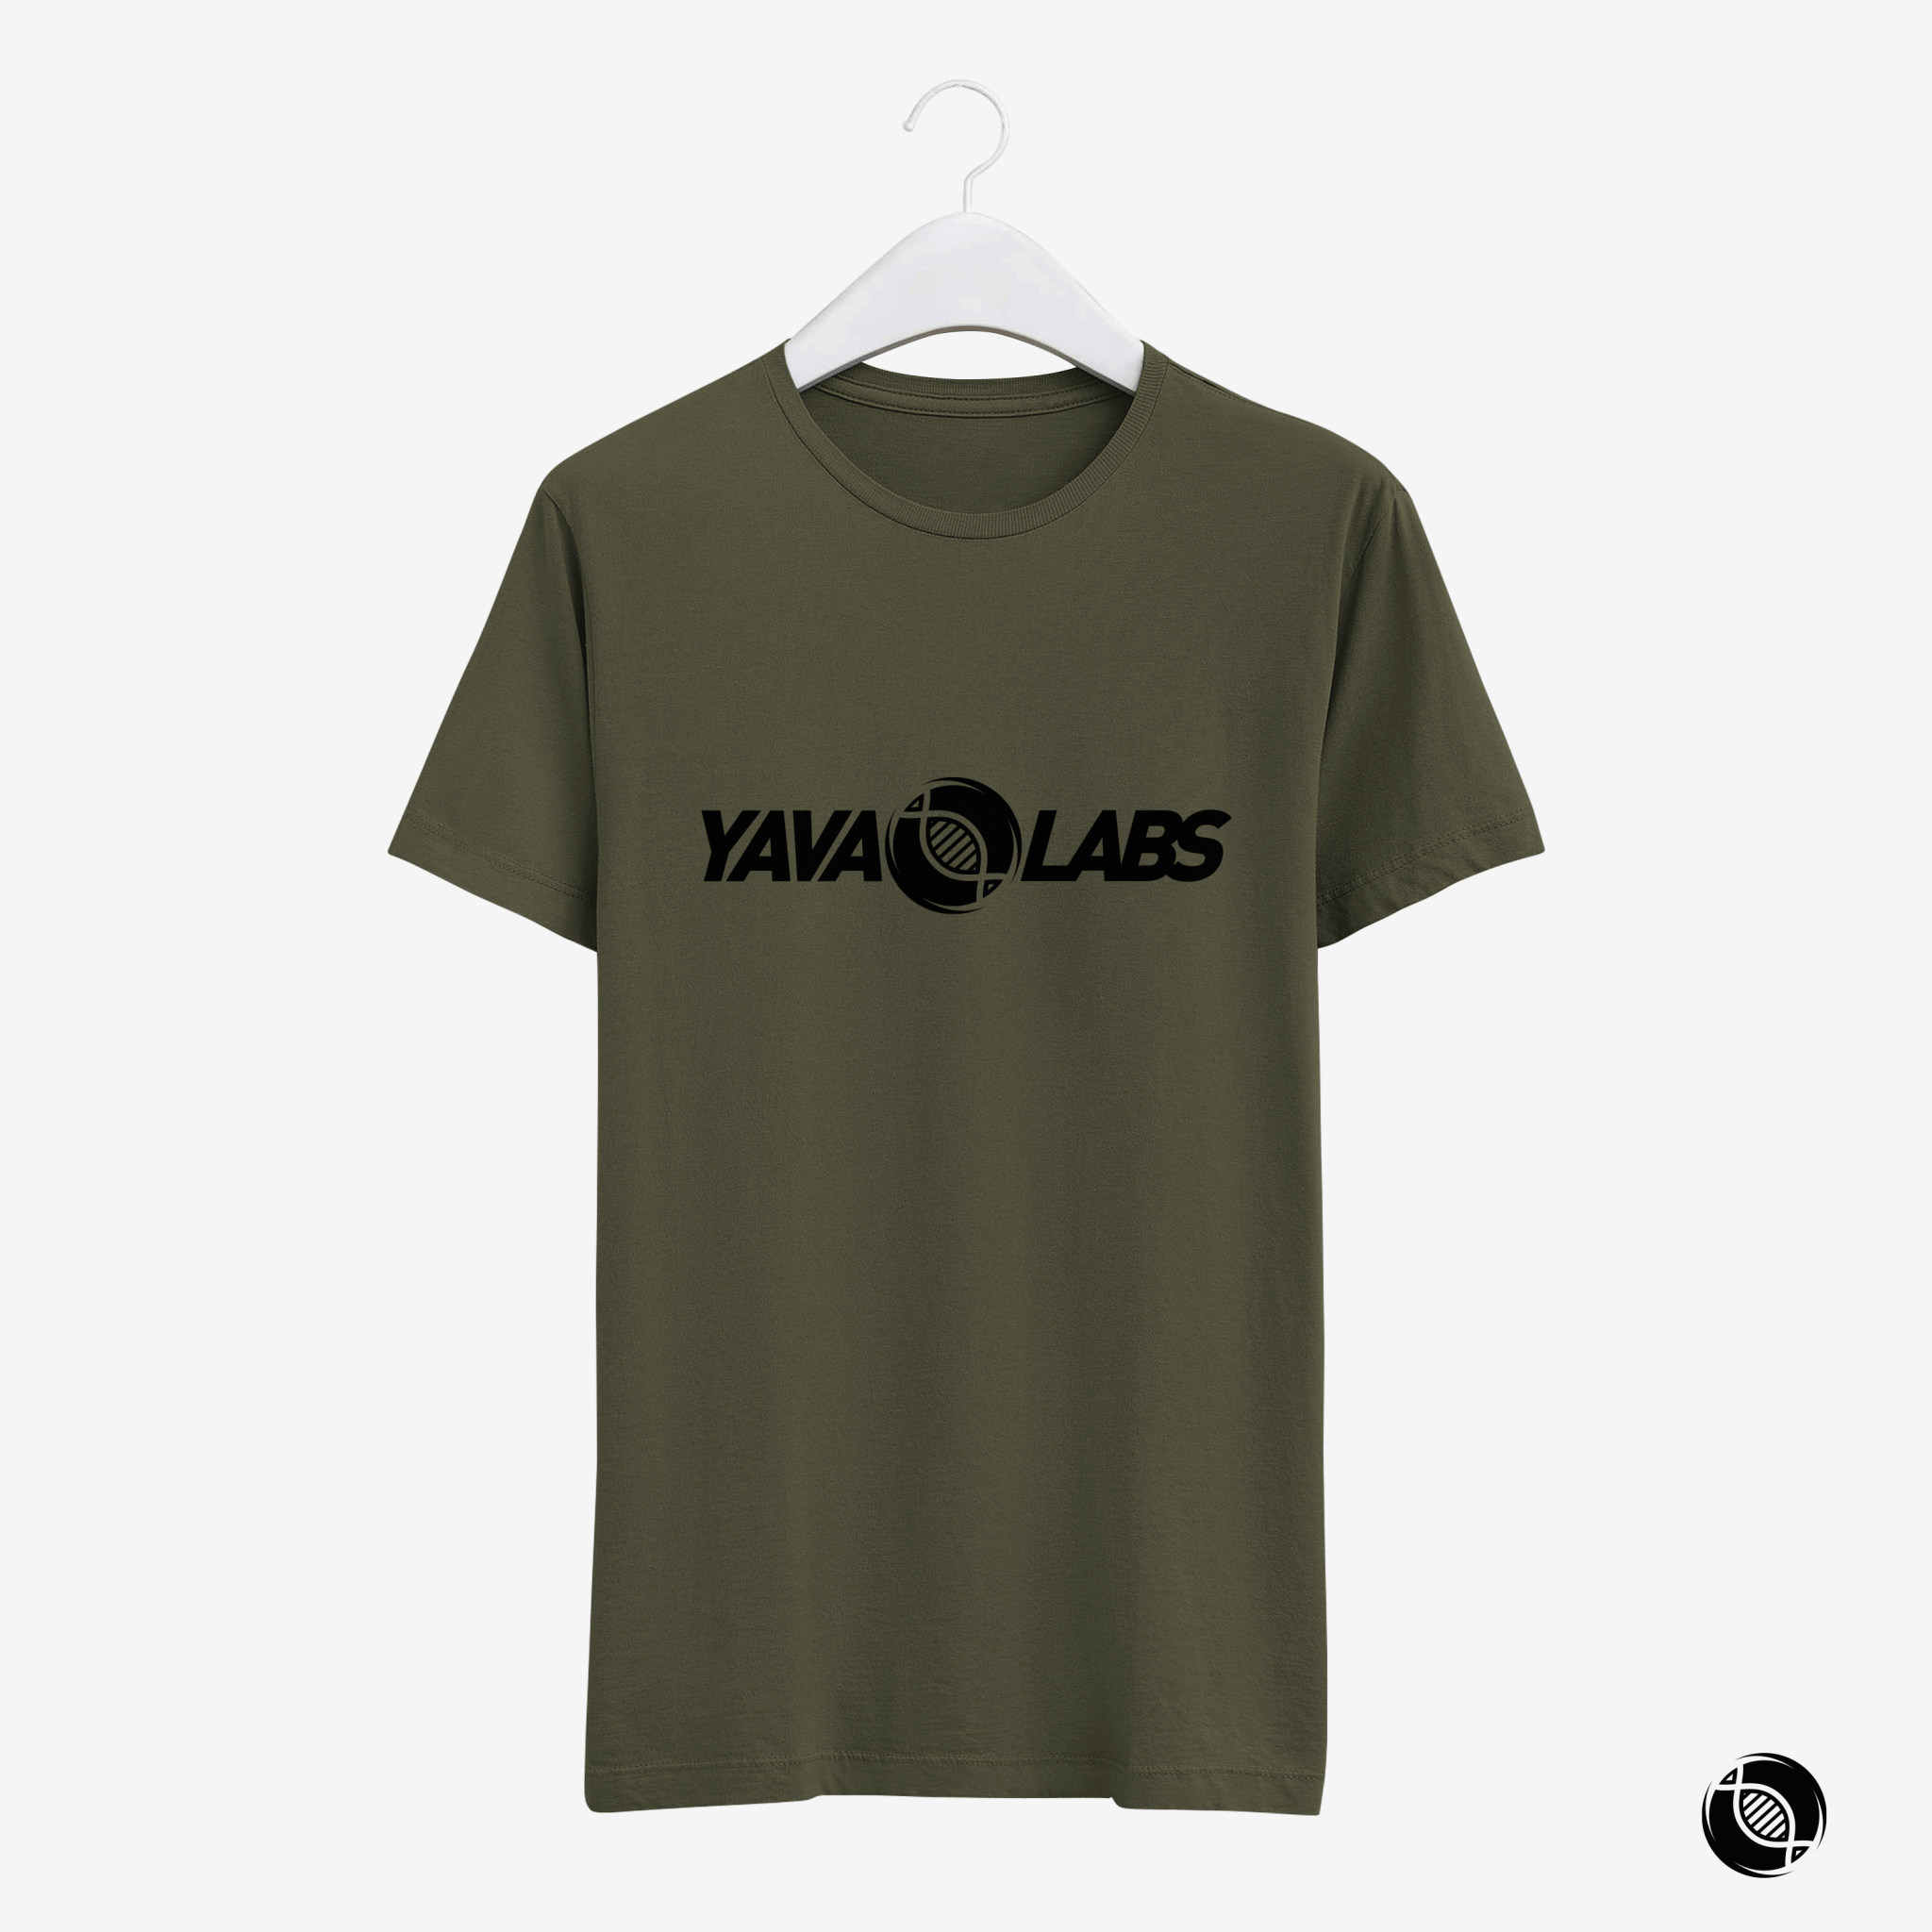 Yava Labs T-shirt - Yava Labs